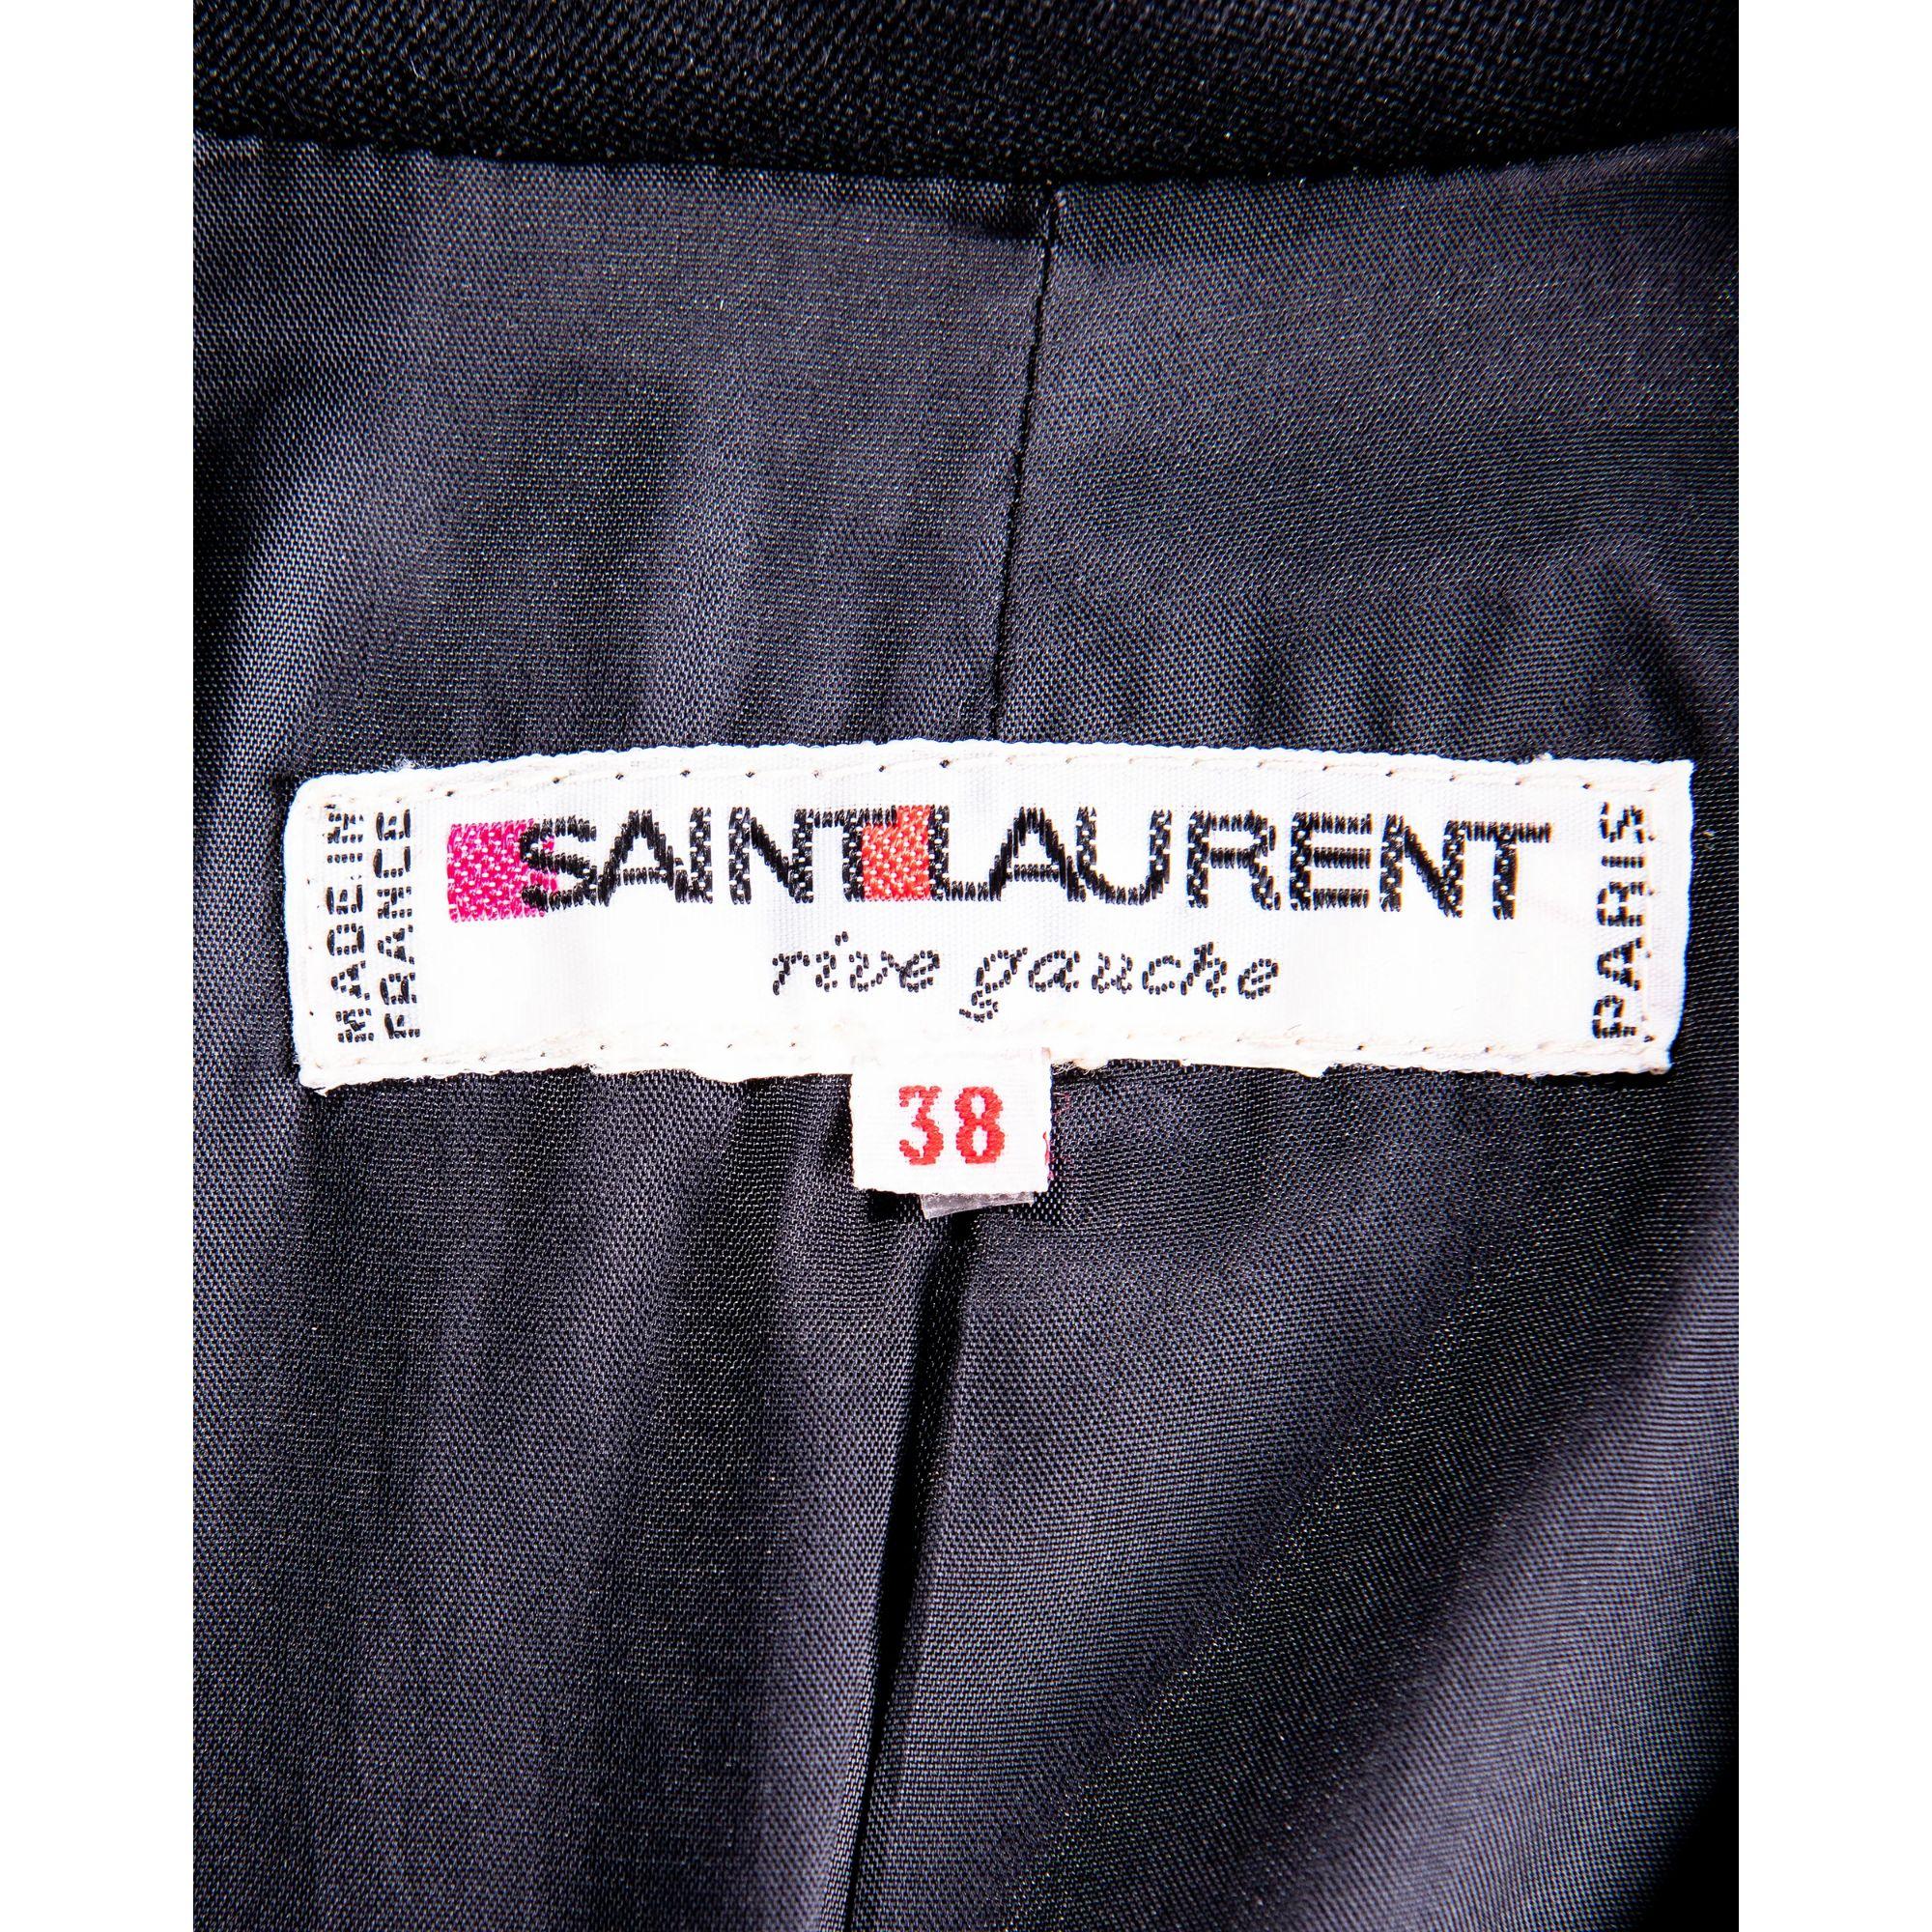 Yves Saint Laurent Rive Gauche Black Tuxedo Dress, 1983 5